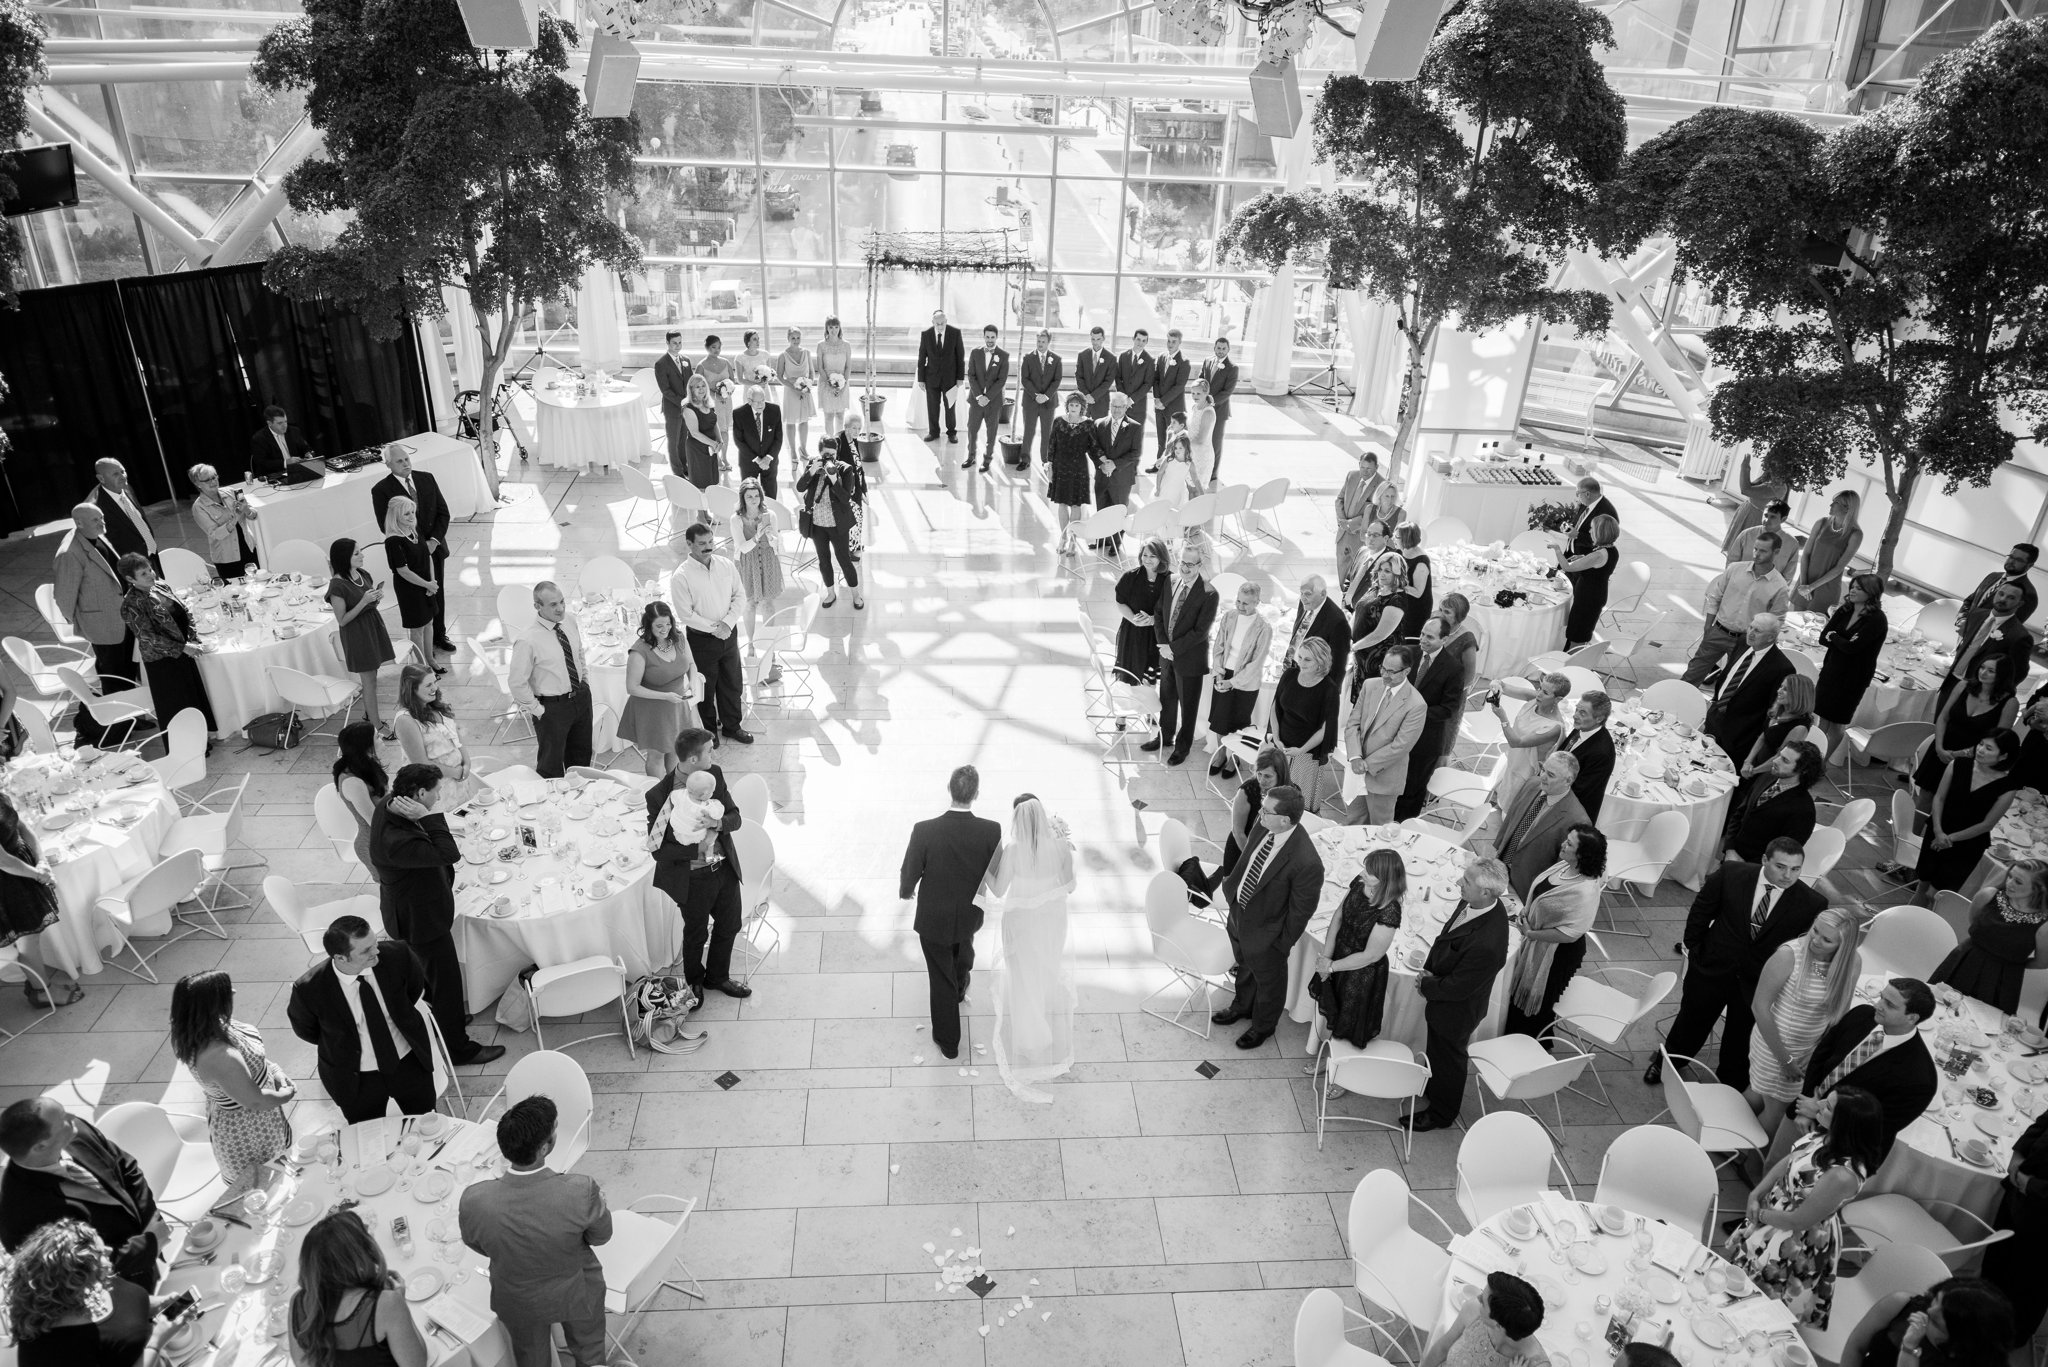 Indianapolis artsgarden wedding ceremony in the atrium